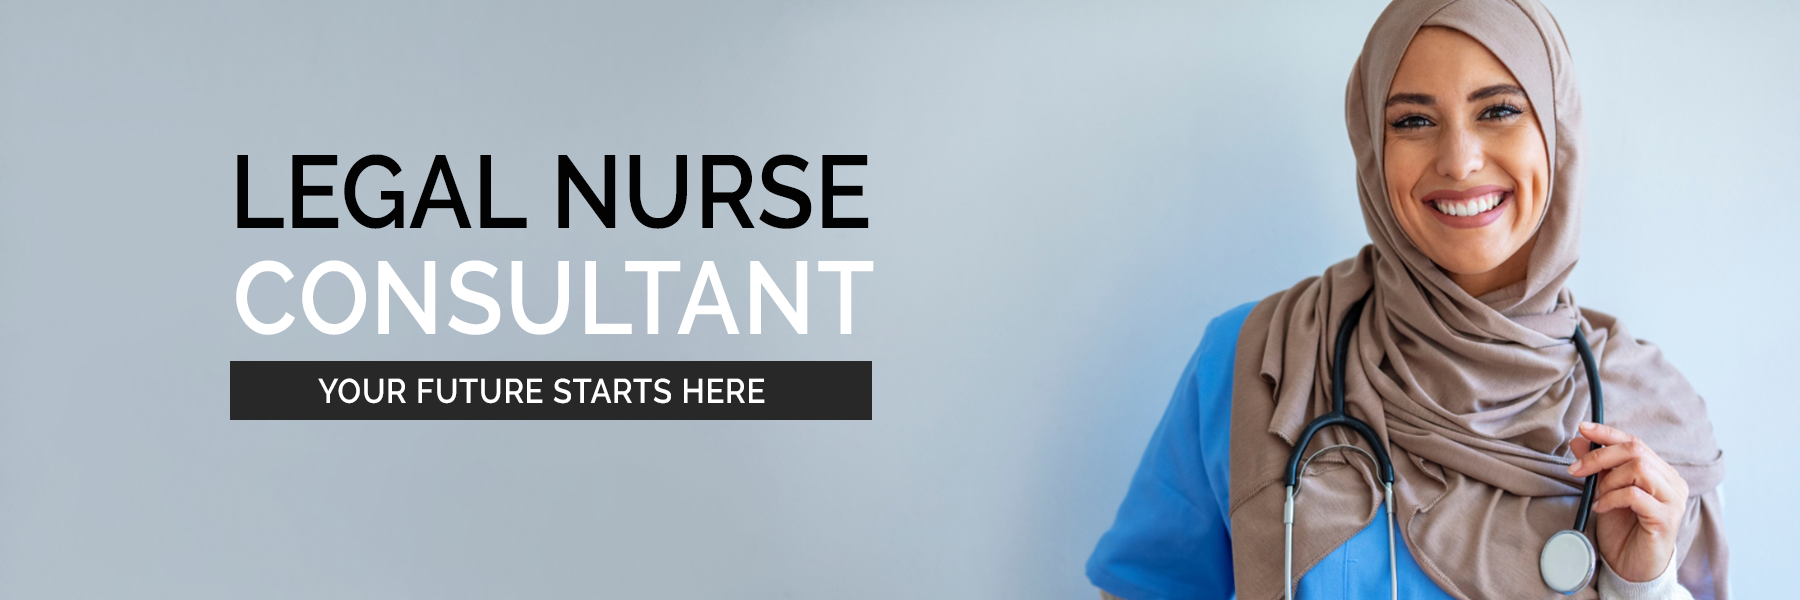 Legal Nurse Consultant. Your future starts here